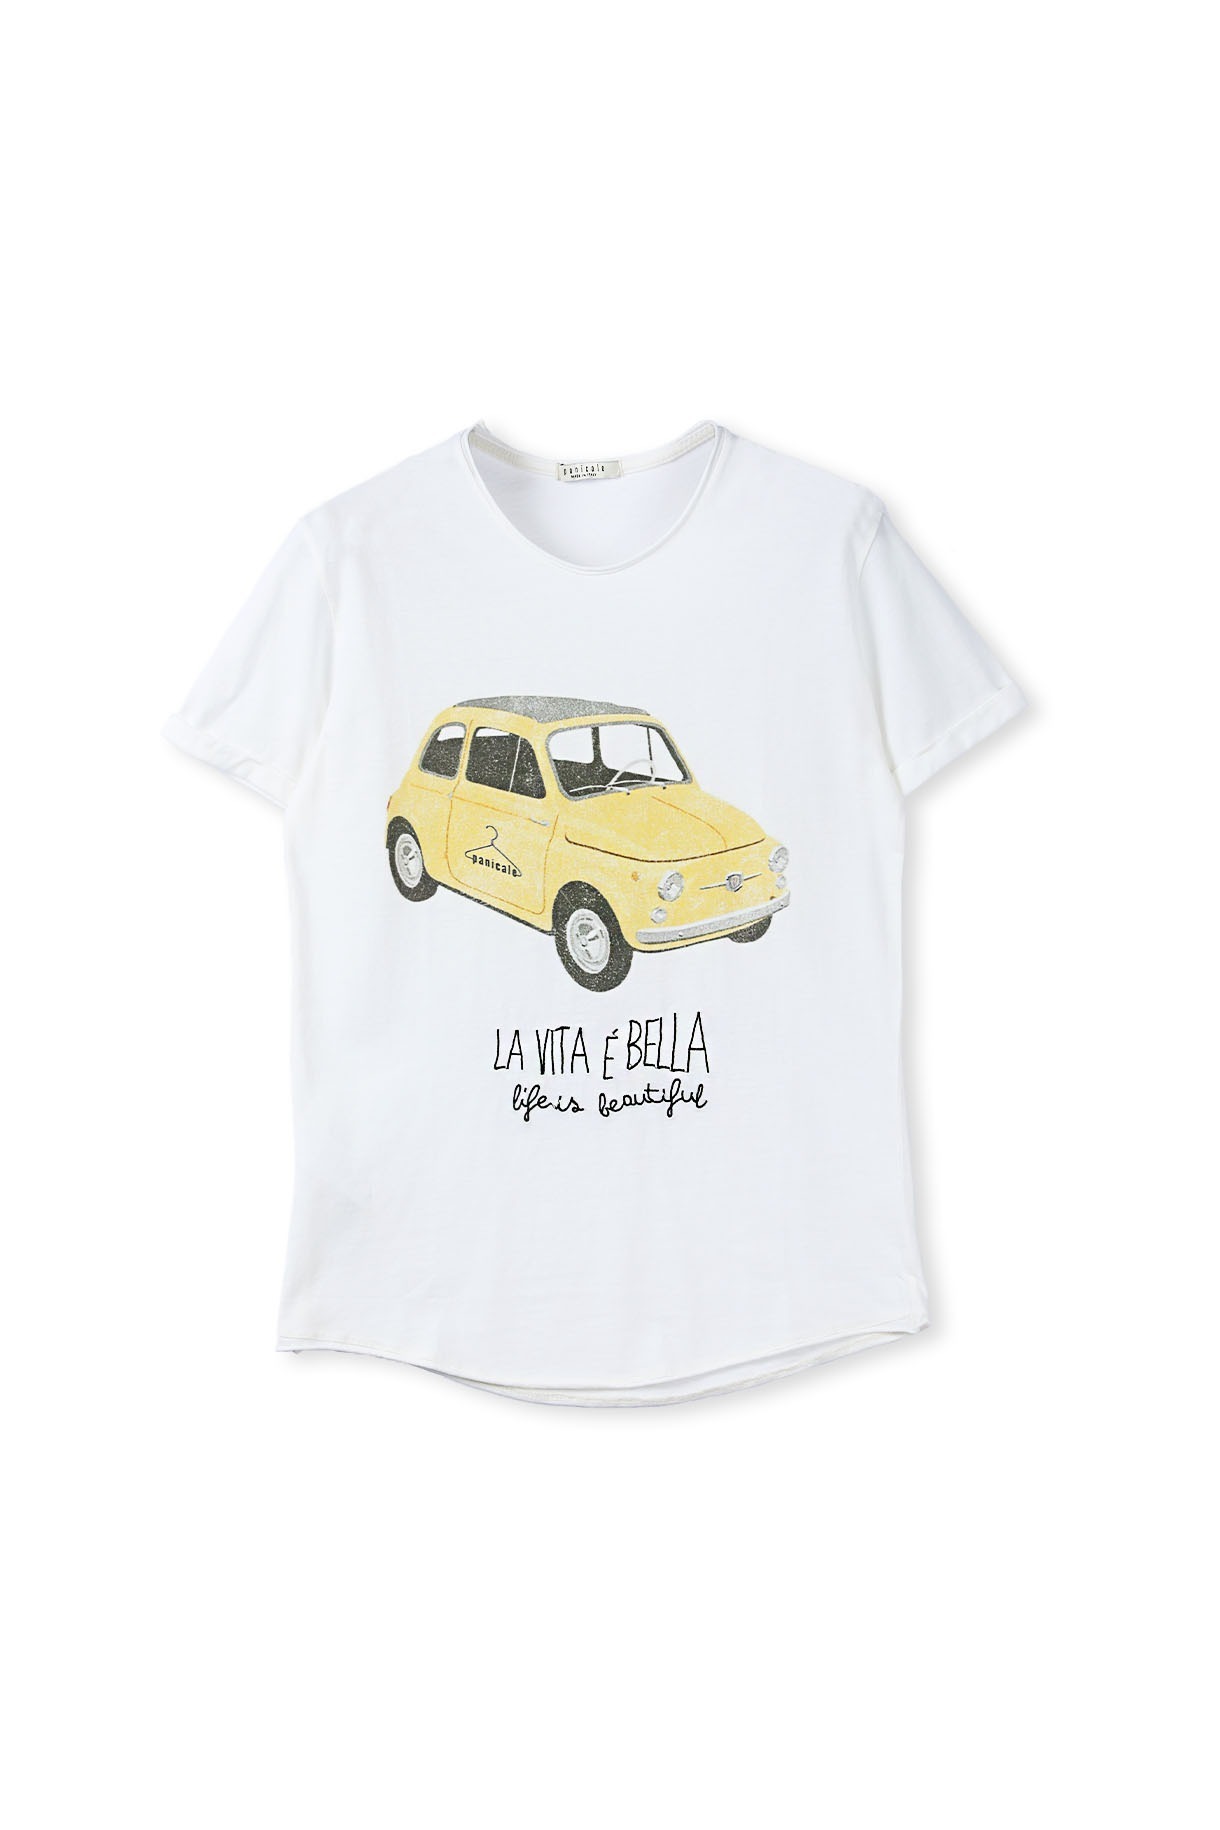 La Vita é Bella 인생은 아름다워 티셔츠